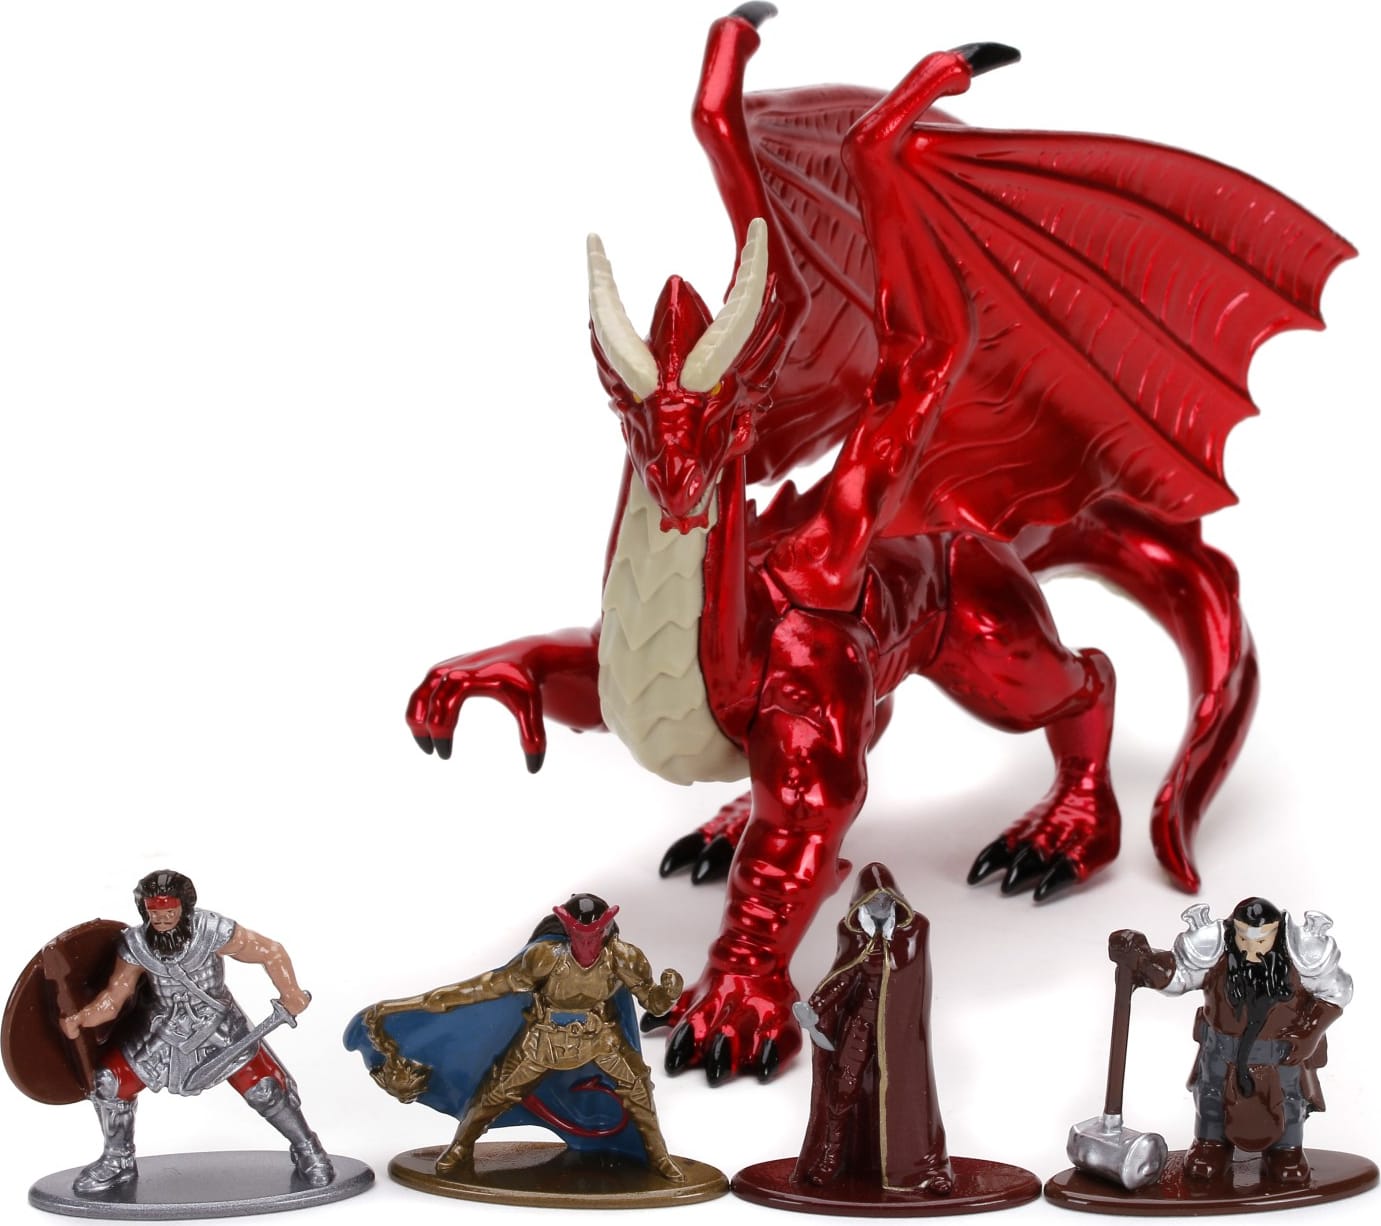 Dungeons & Dragons Minimates Villains Deluxe Box Set (Series 2) – Hasbro  Pulse